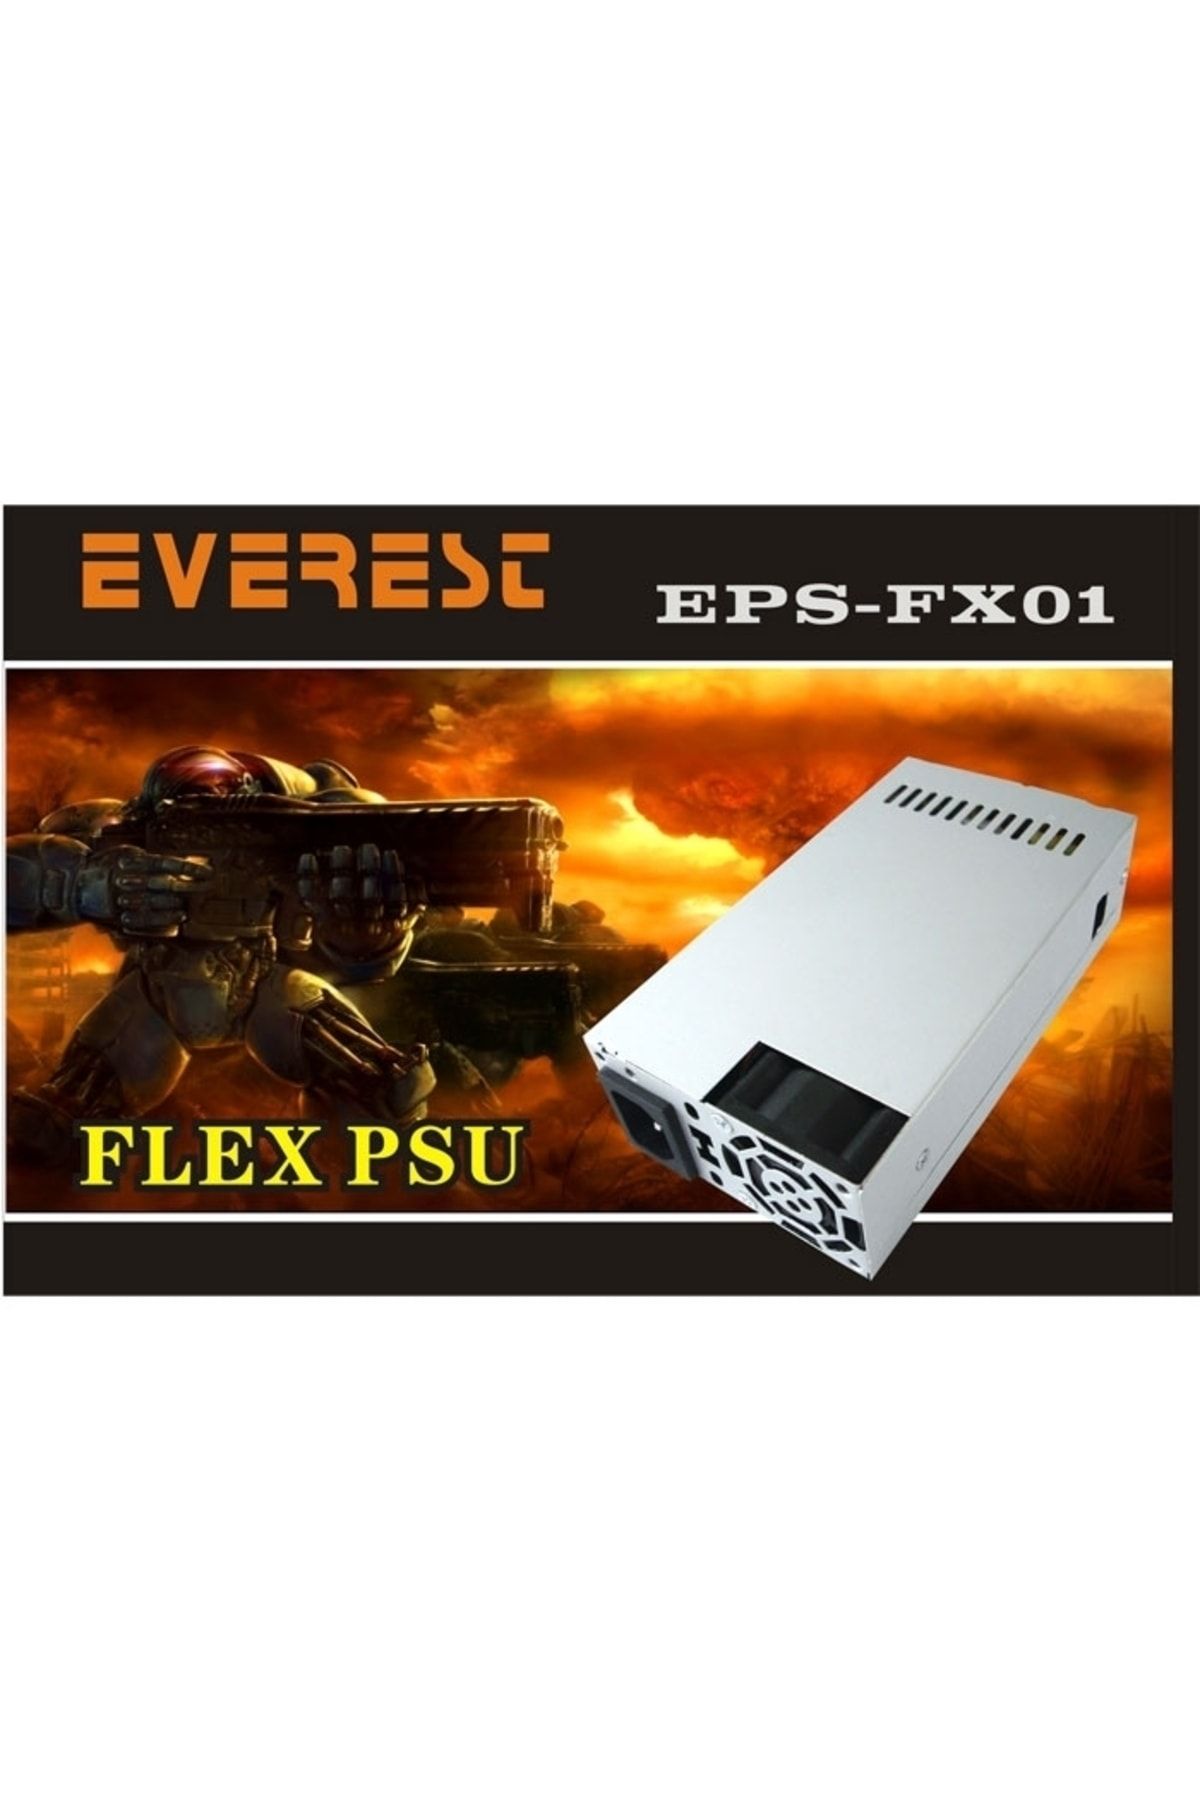 Everest Eps-fx01 250w Power Supply